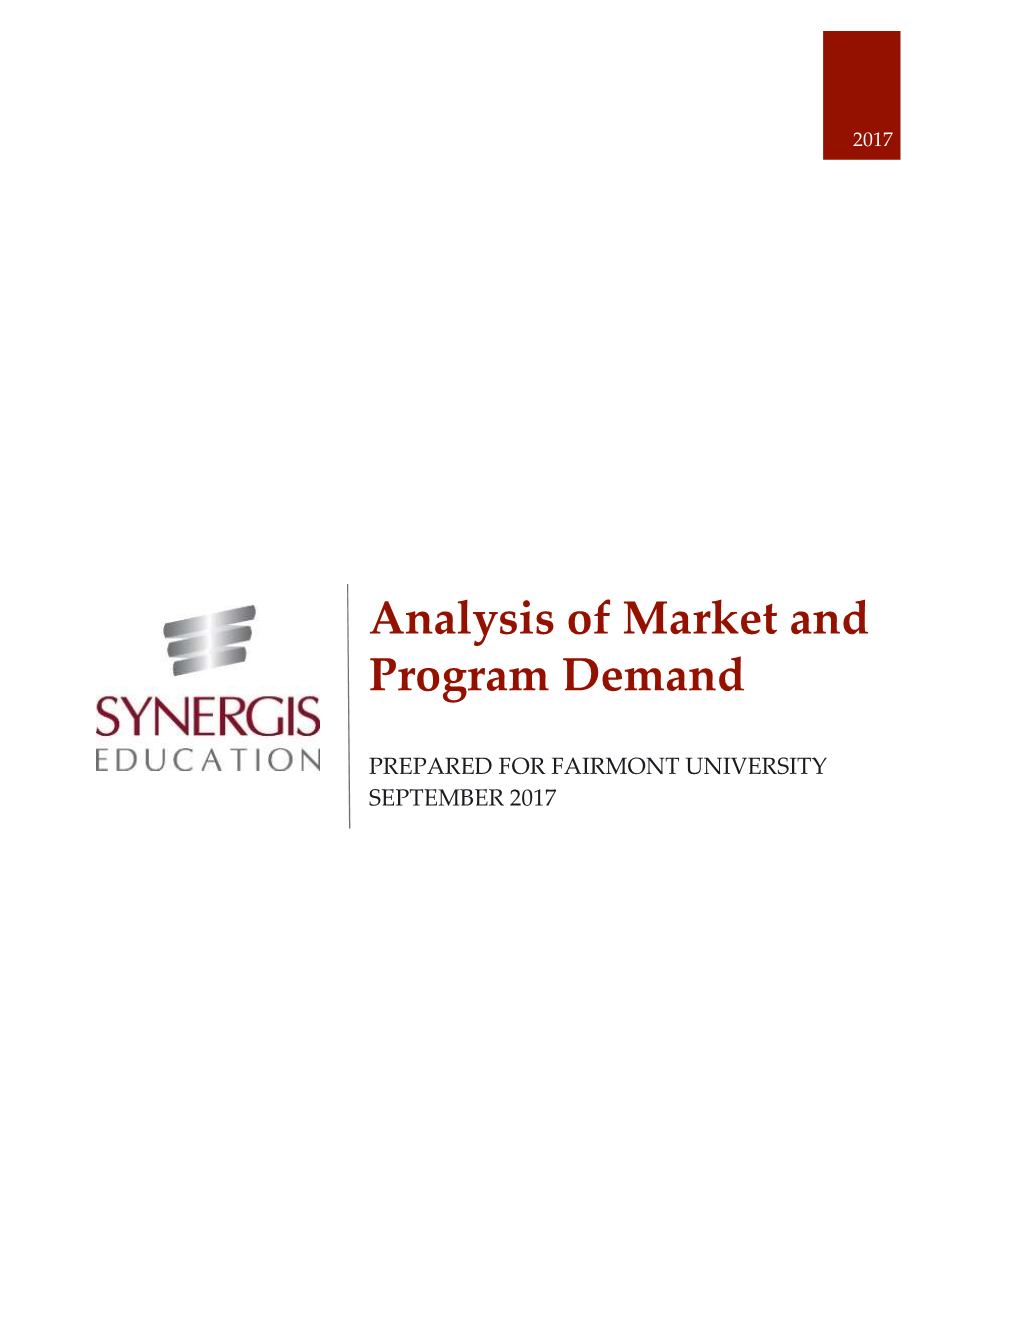 Analysis of Market and Program Demand